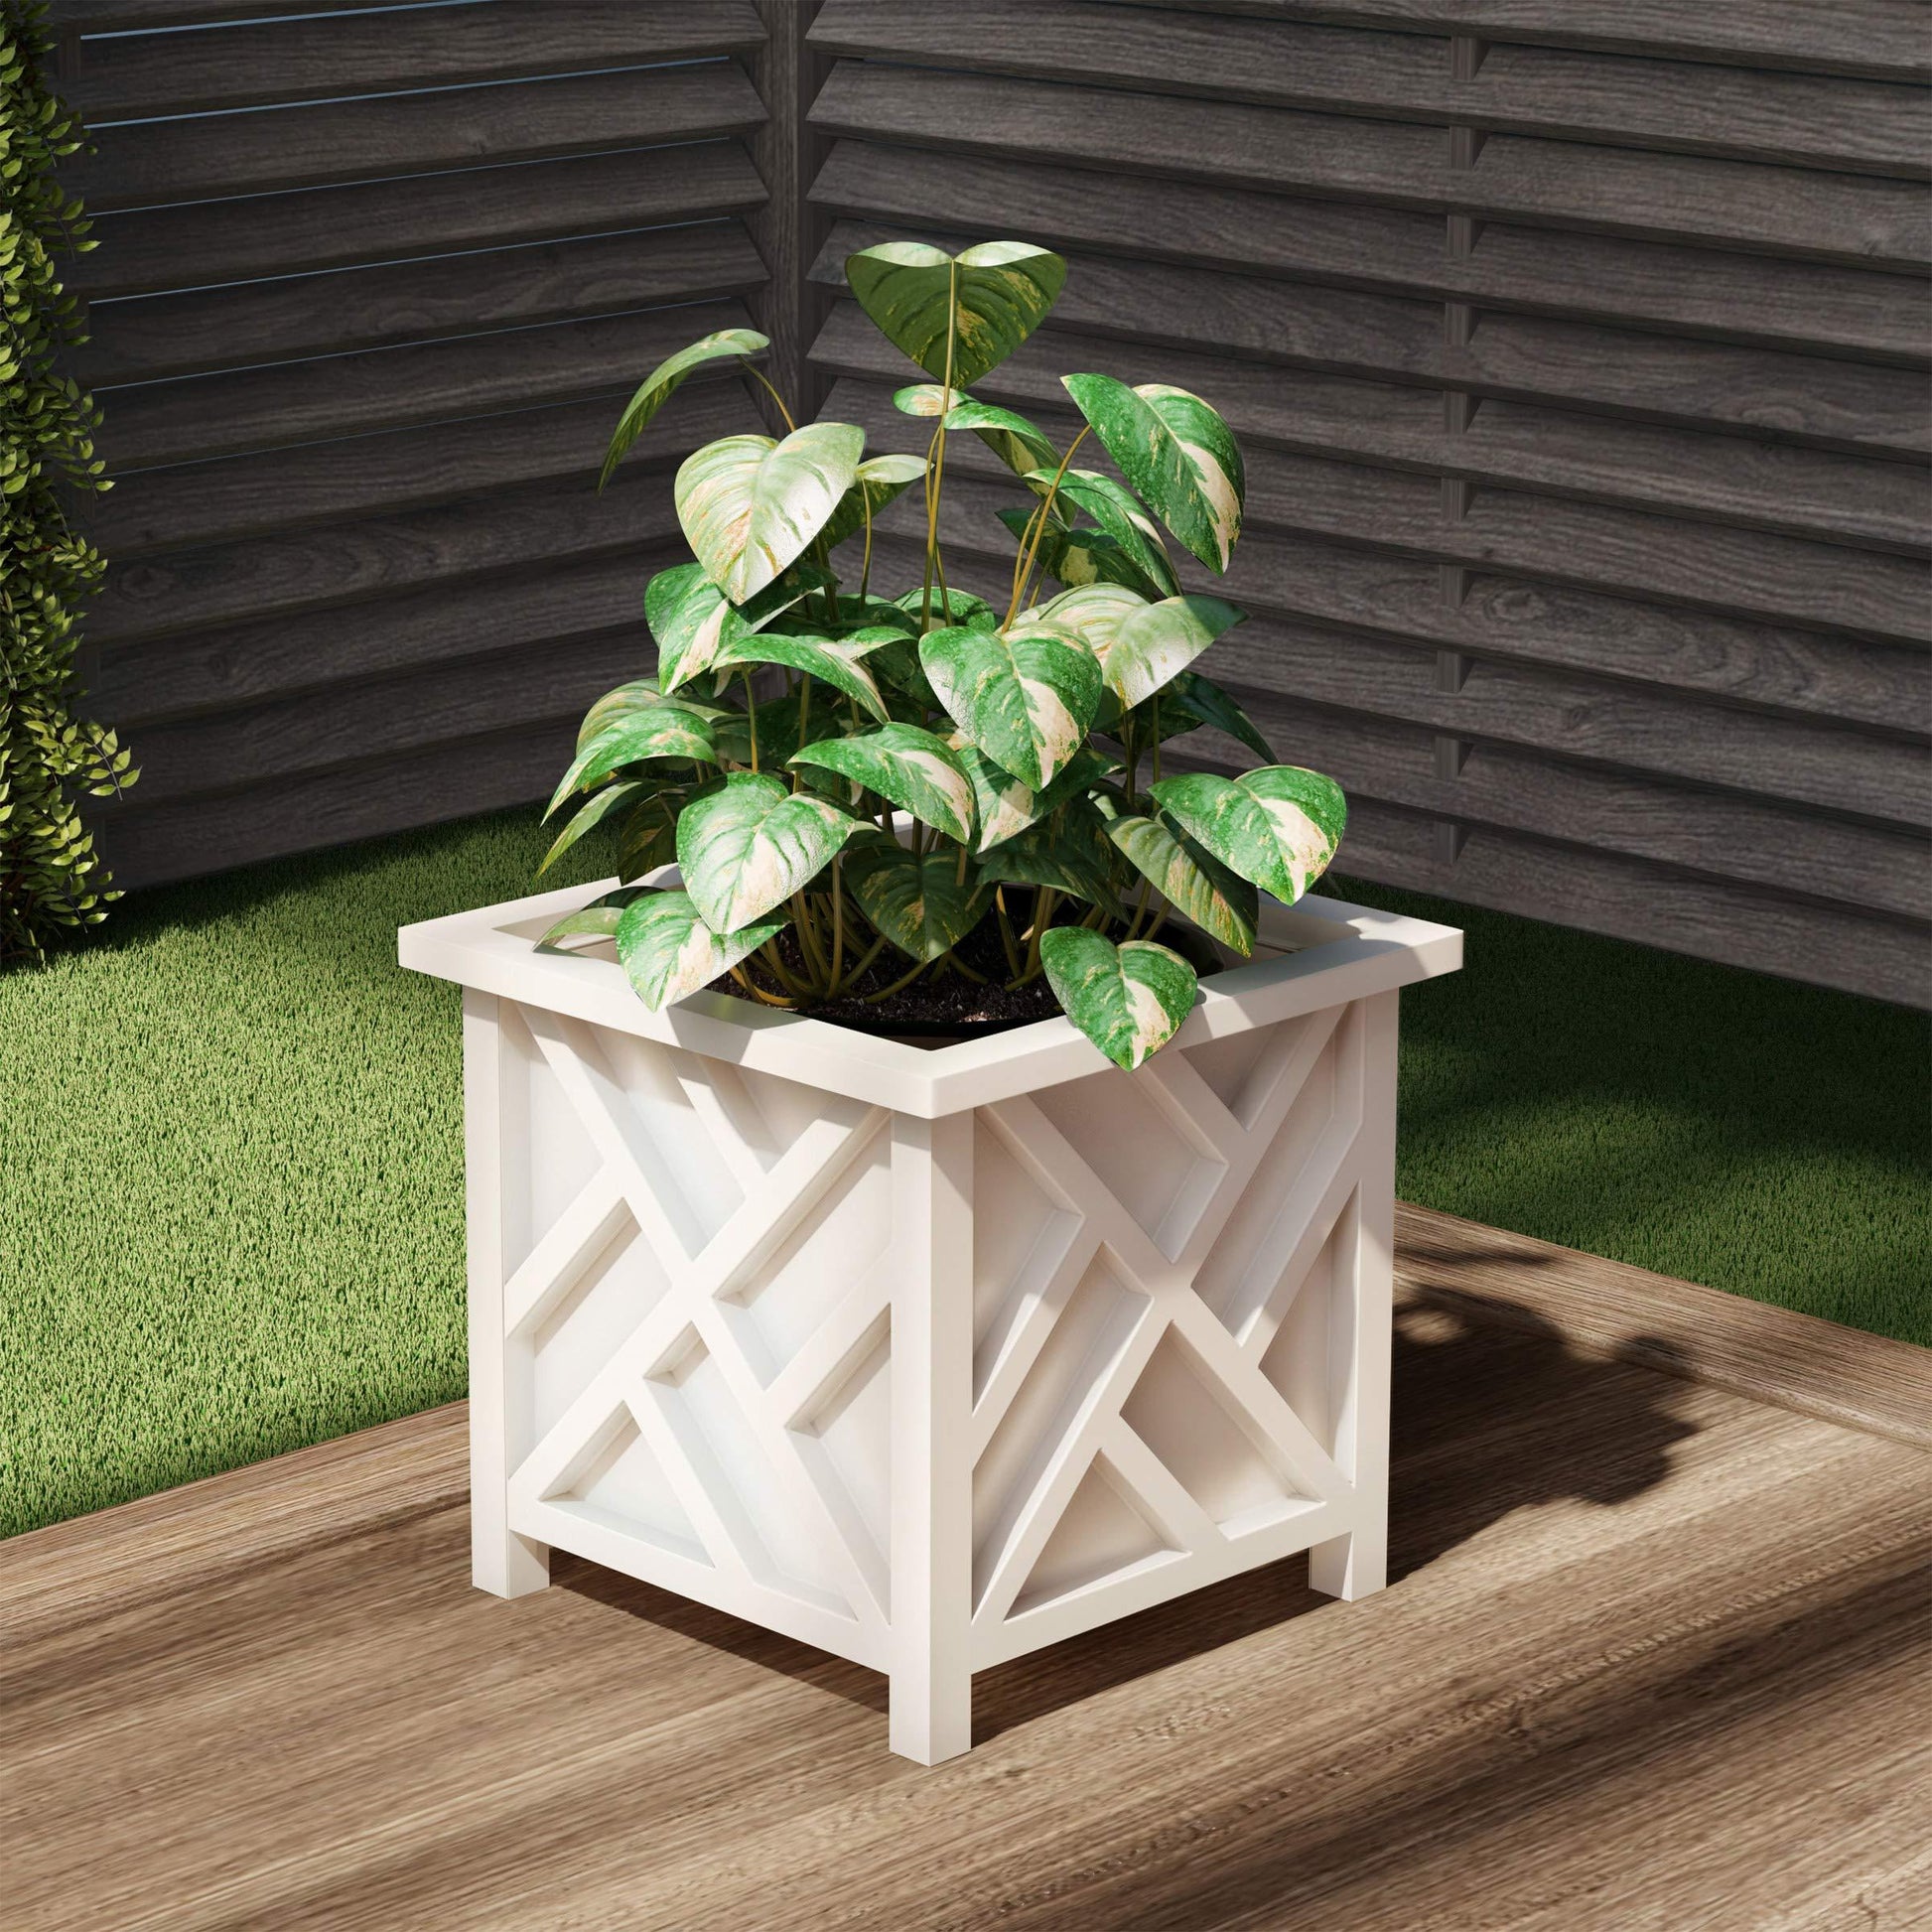 Lattice Design Planter Box – 14.75-Inch-Square Decorative Outdoor Flower or Plant Pot – Front Porch, Patio, and Garden Decor by Pure Garden (White) - CookCave